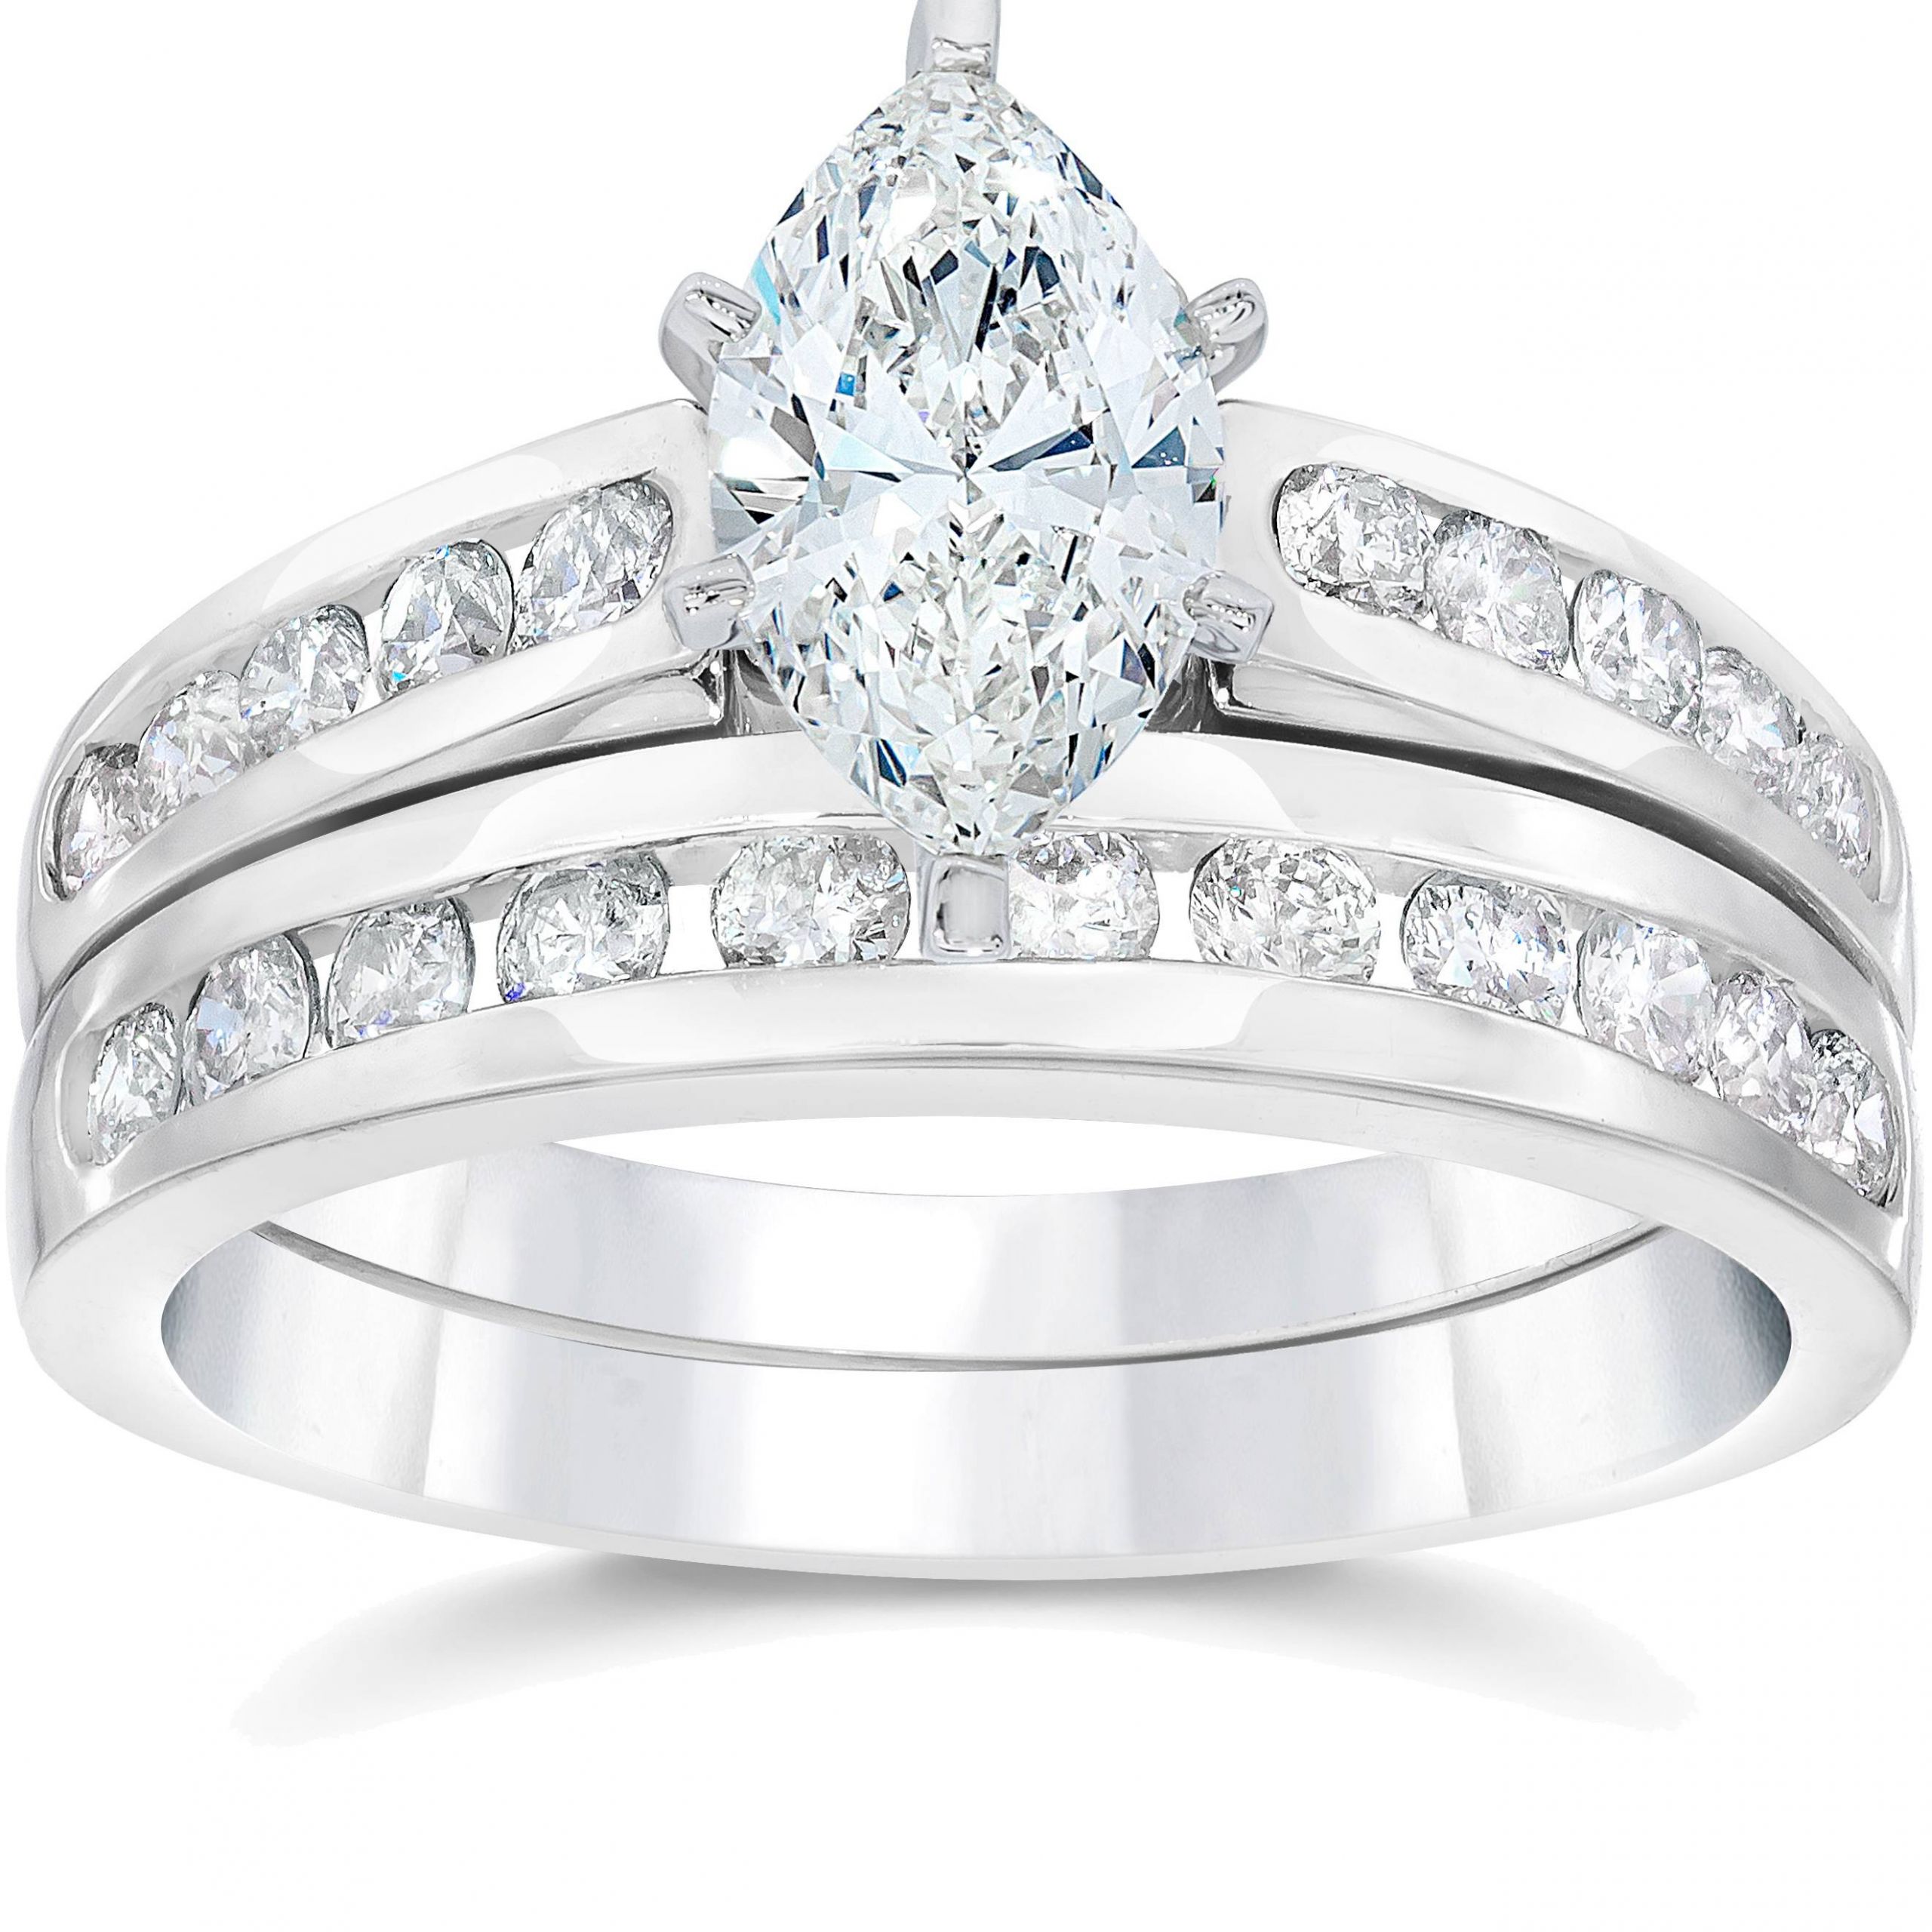 Marquise Diamond Rings
 2 Carat Marquise Enhanced Diamond Engagement Wedding Ring